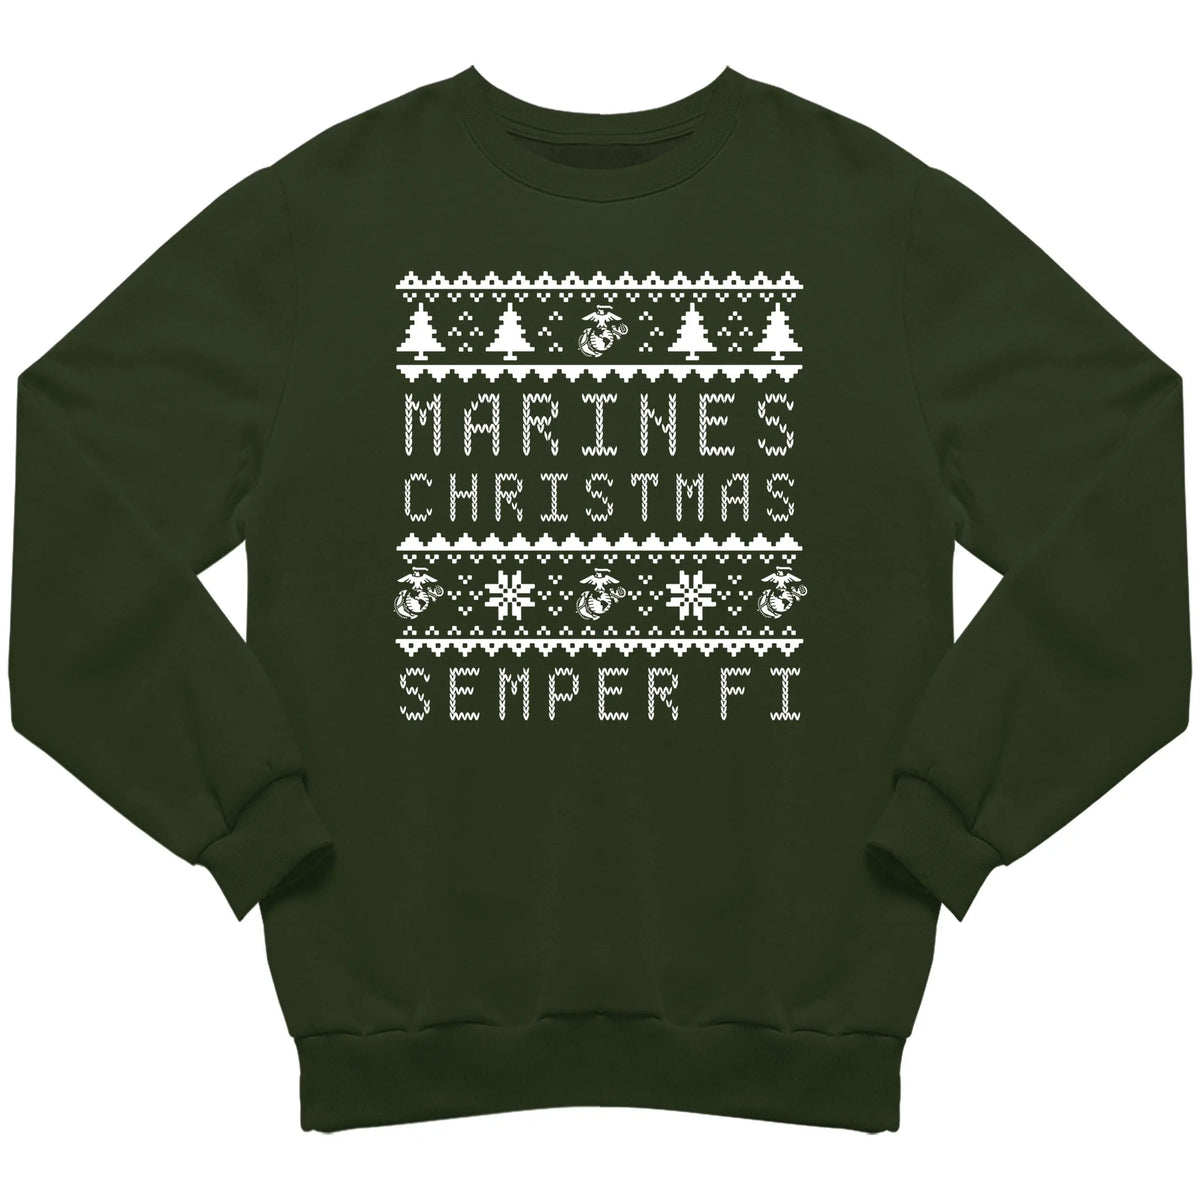 Closeut Marines Christmas Sweatshirt Forest Green